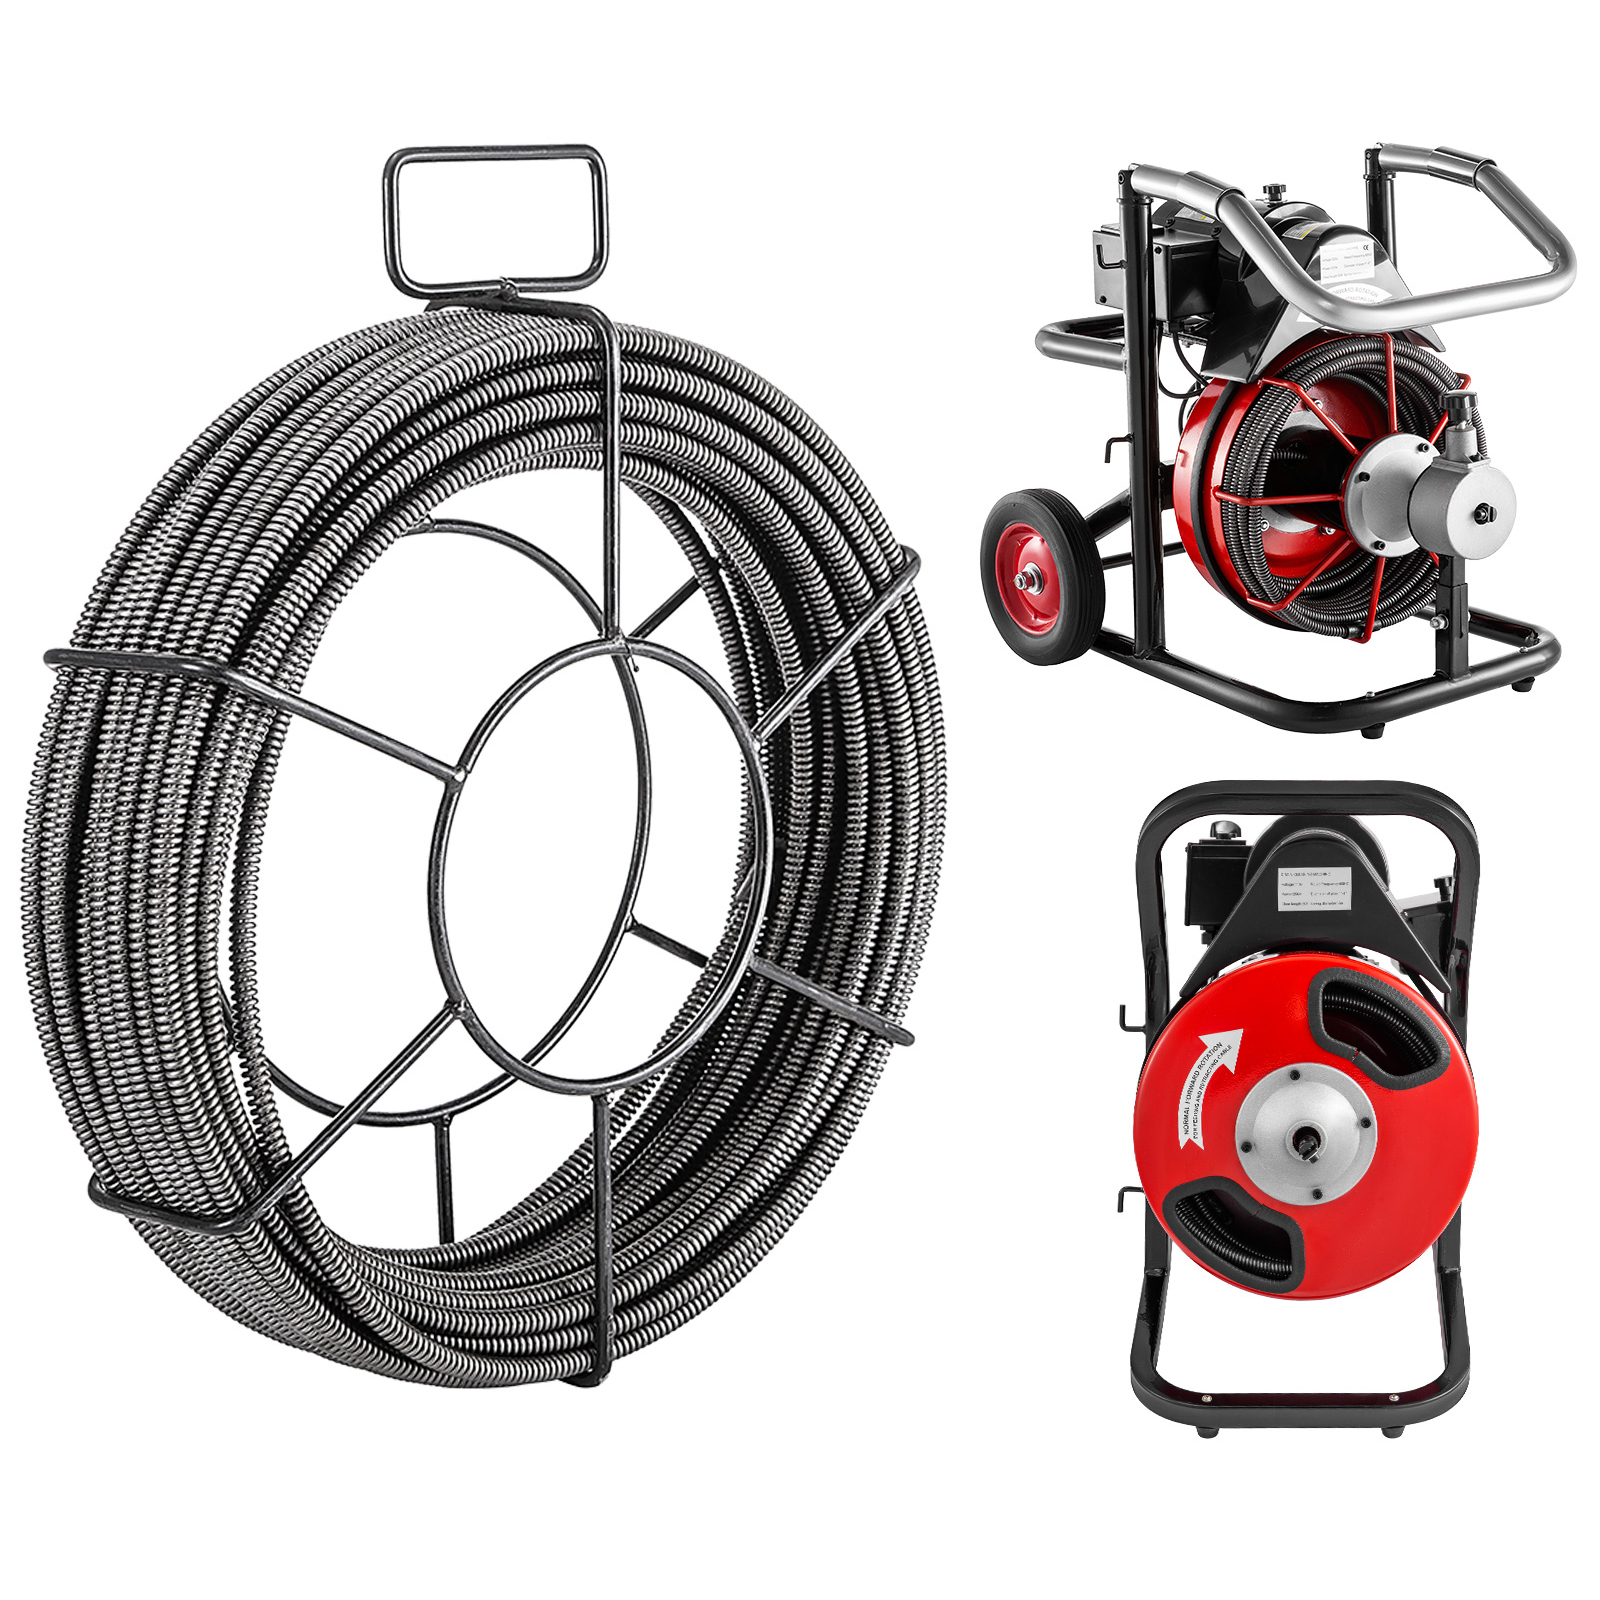 Cobra® 1/4 x 50' Cable Drain Cleaning Machine at Menards®